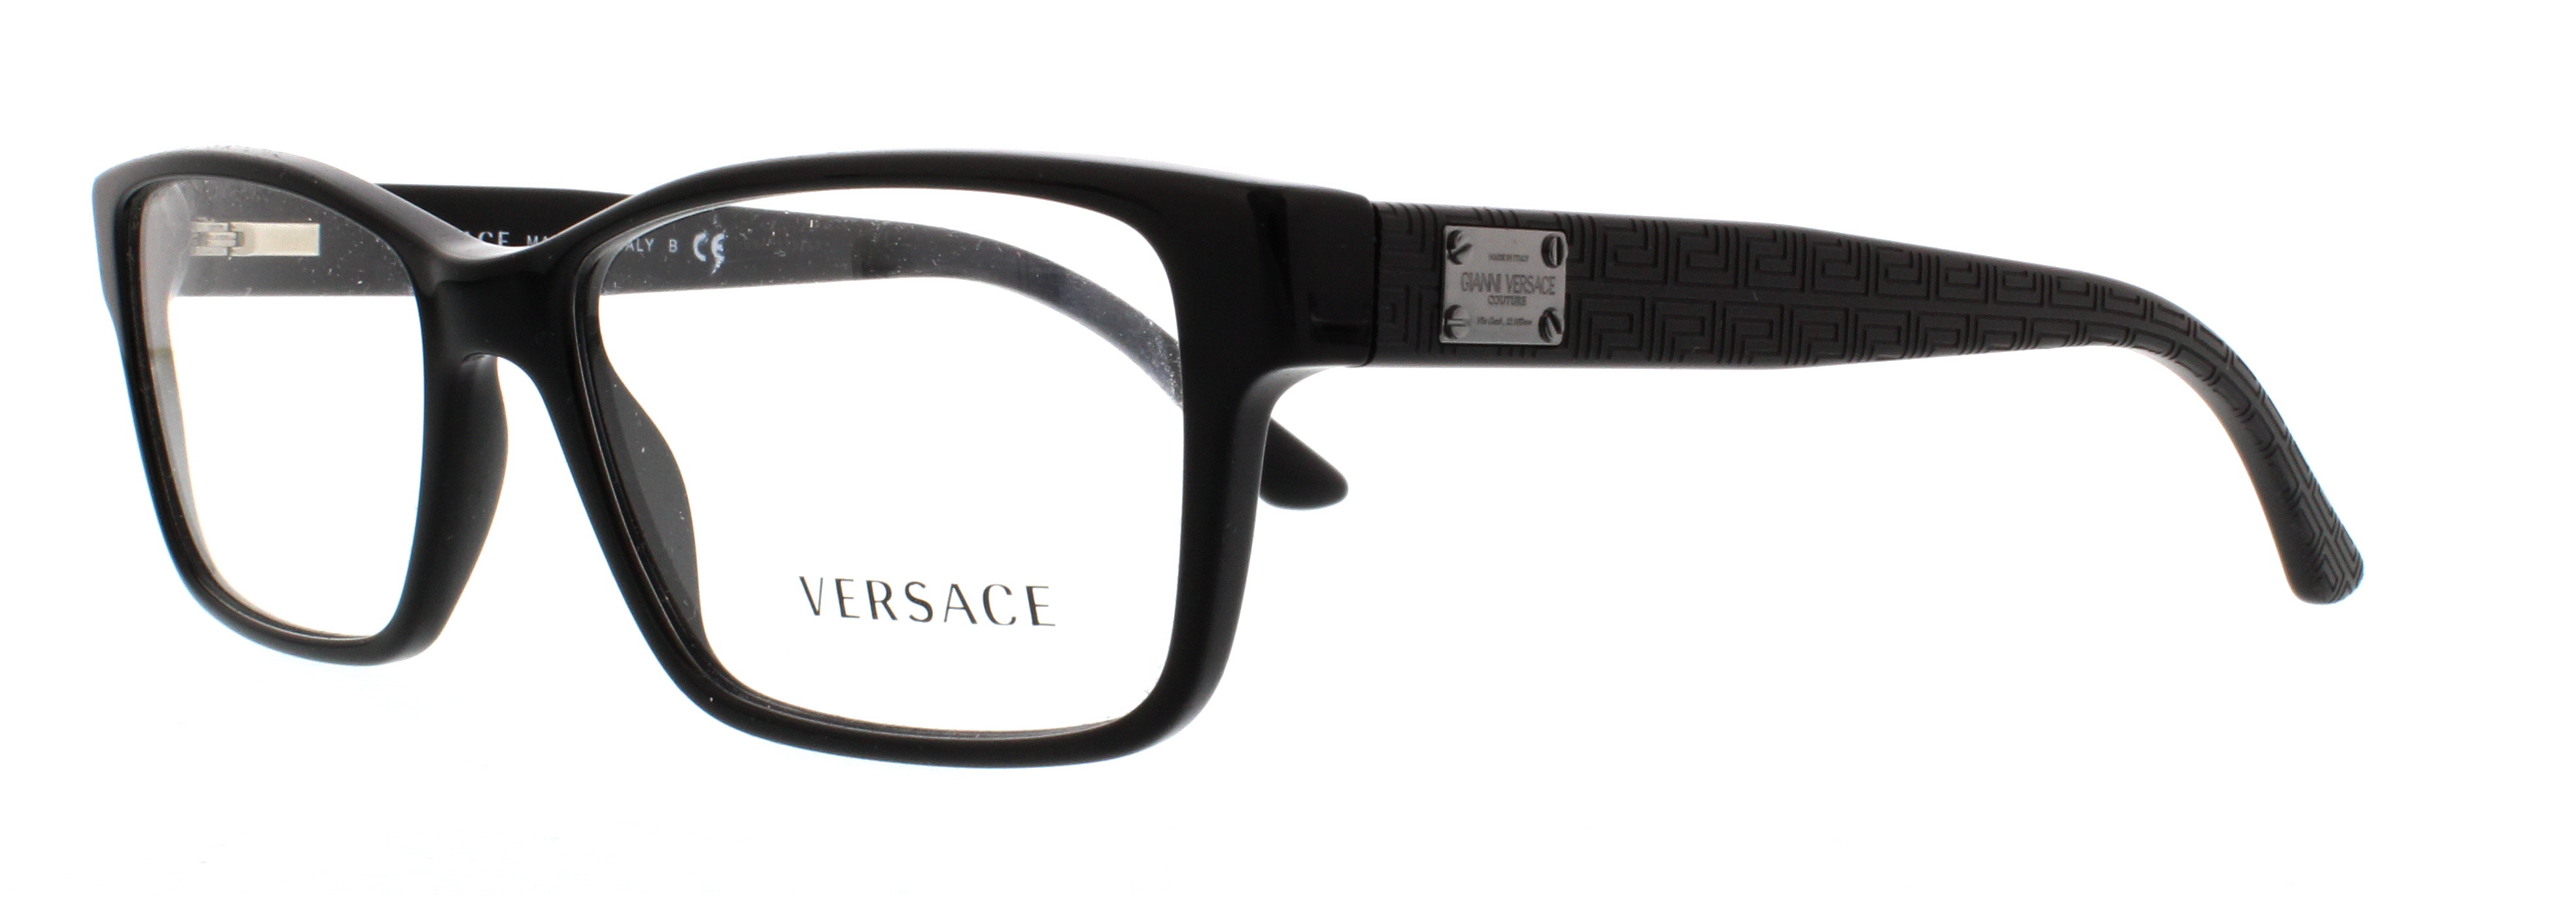 Picture of Versace Eyeglasses VE3198